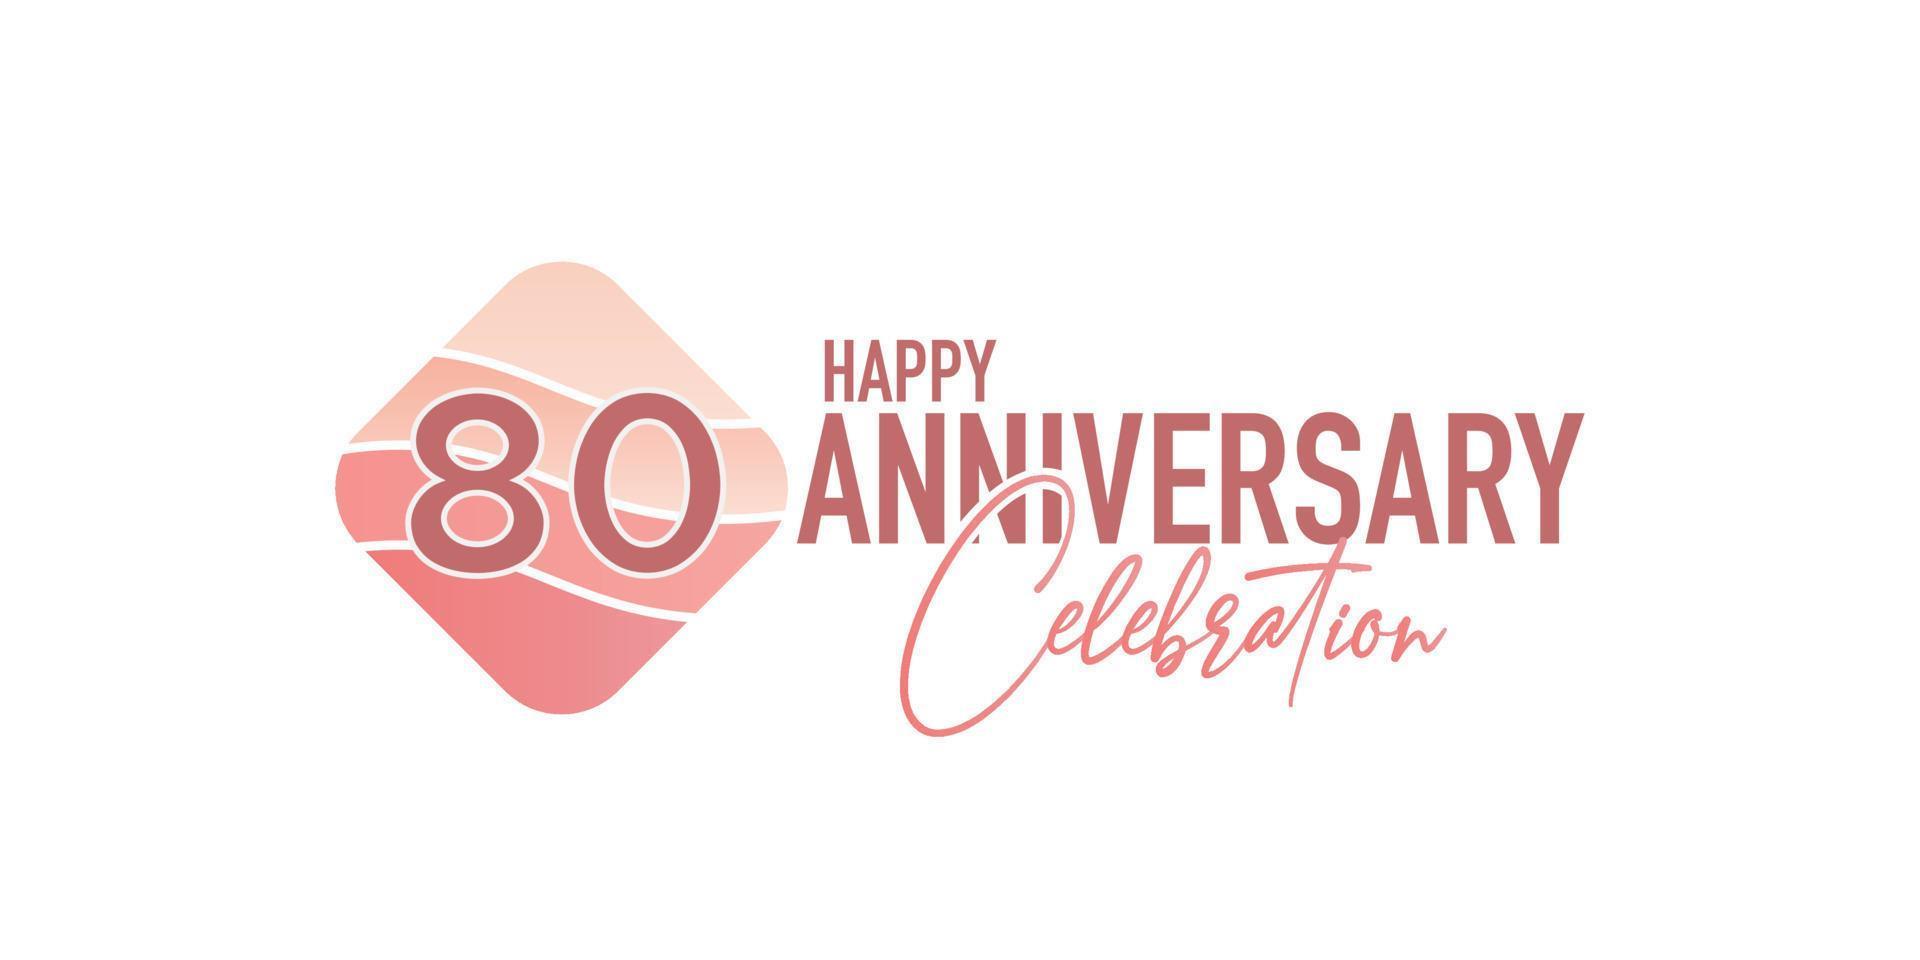 80 years anniversary logo vector illustration design celebration with pink geometric design